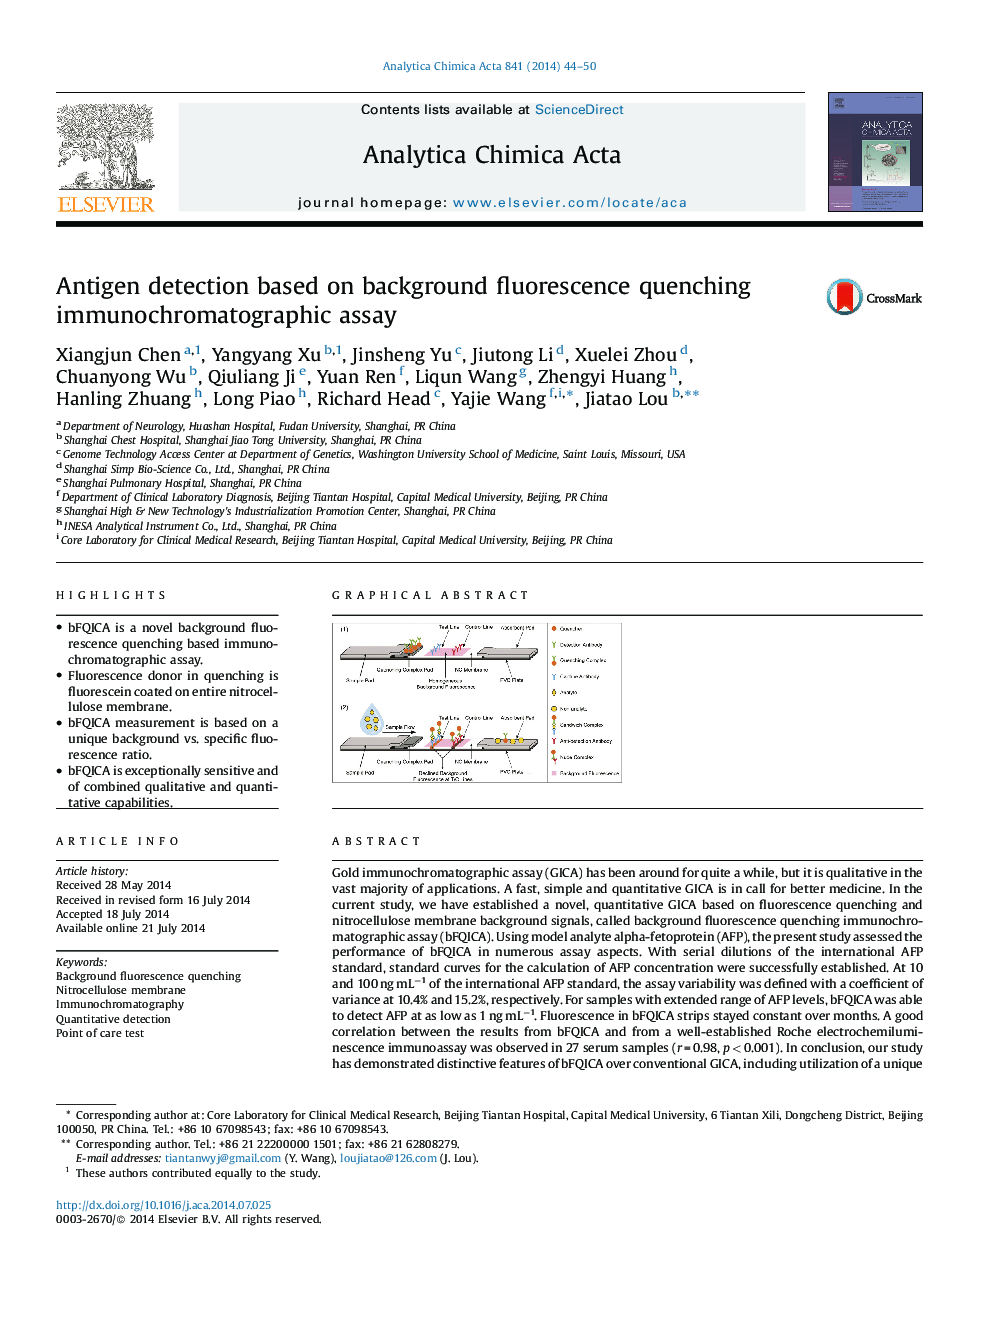 Antigen detection based on background fluorescence quenching immunochromatographic assay